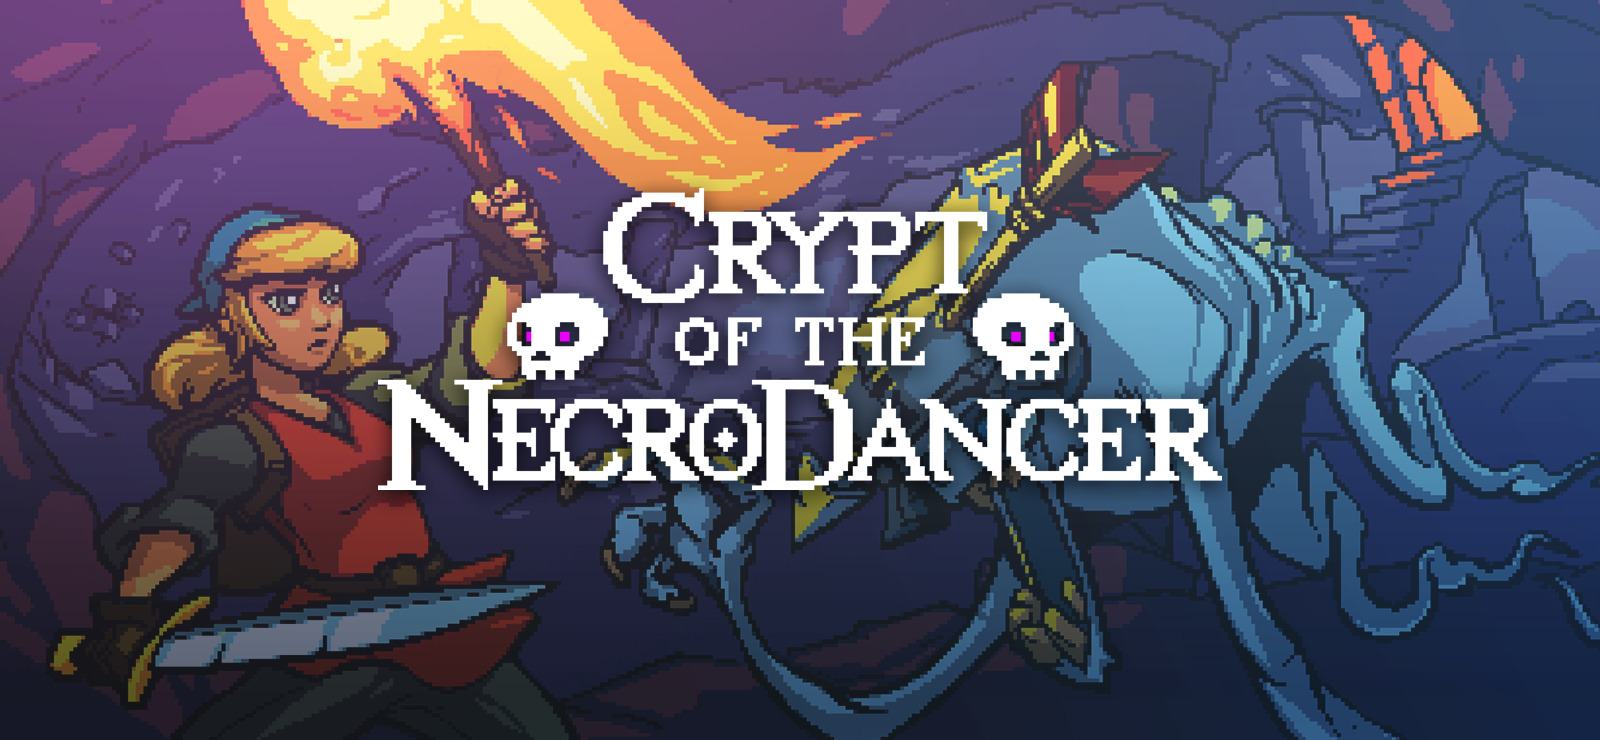 download crypt of the necrodancer cadence